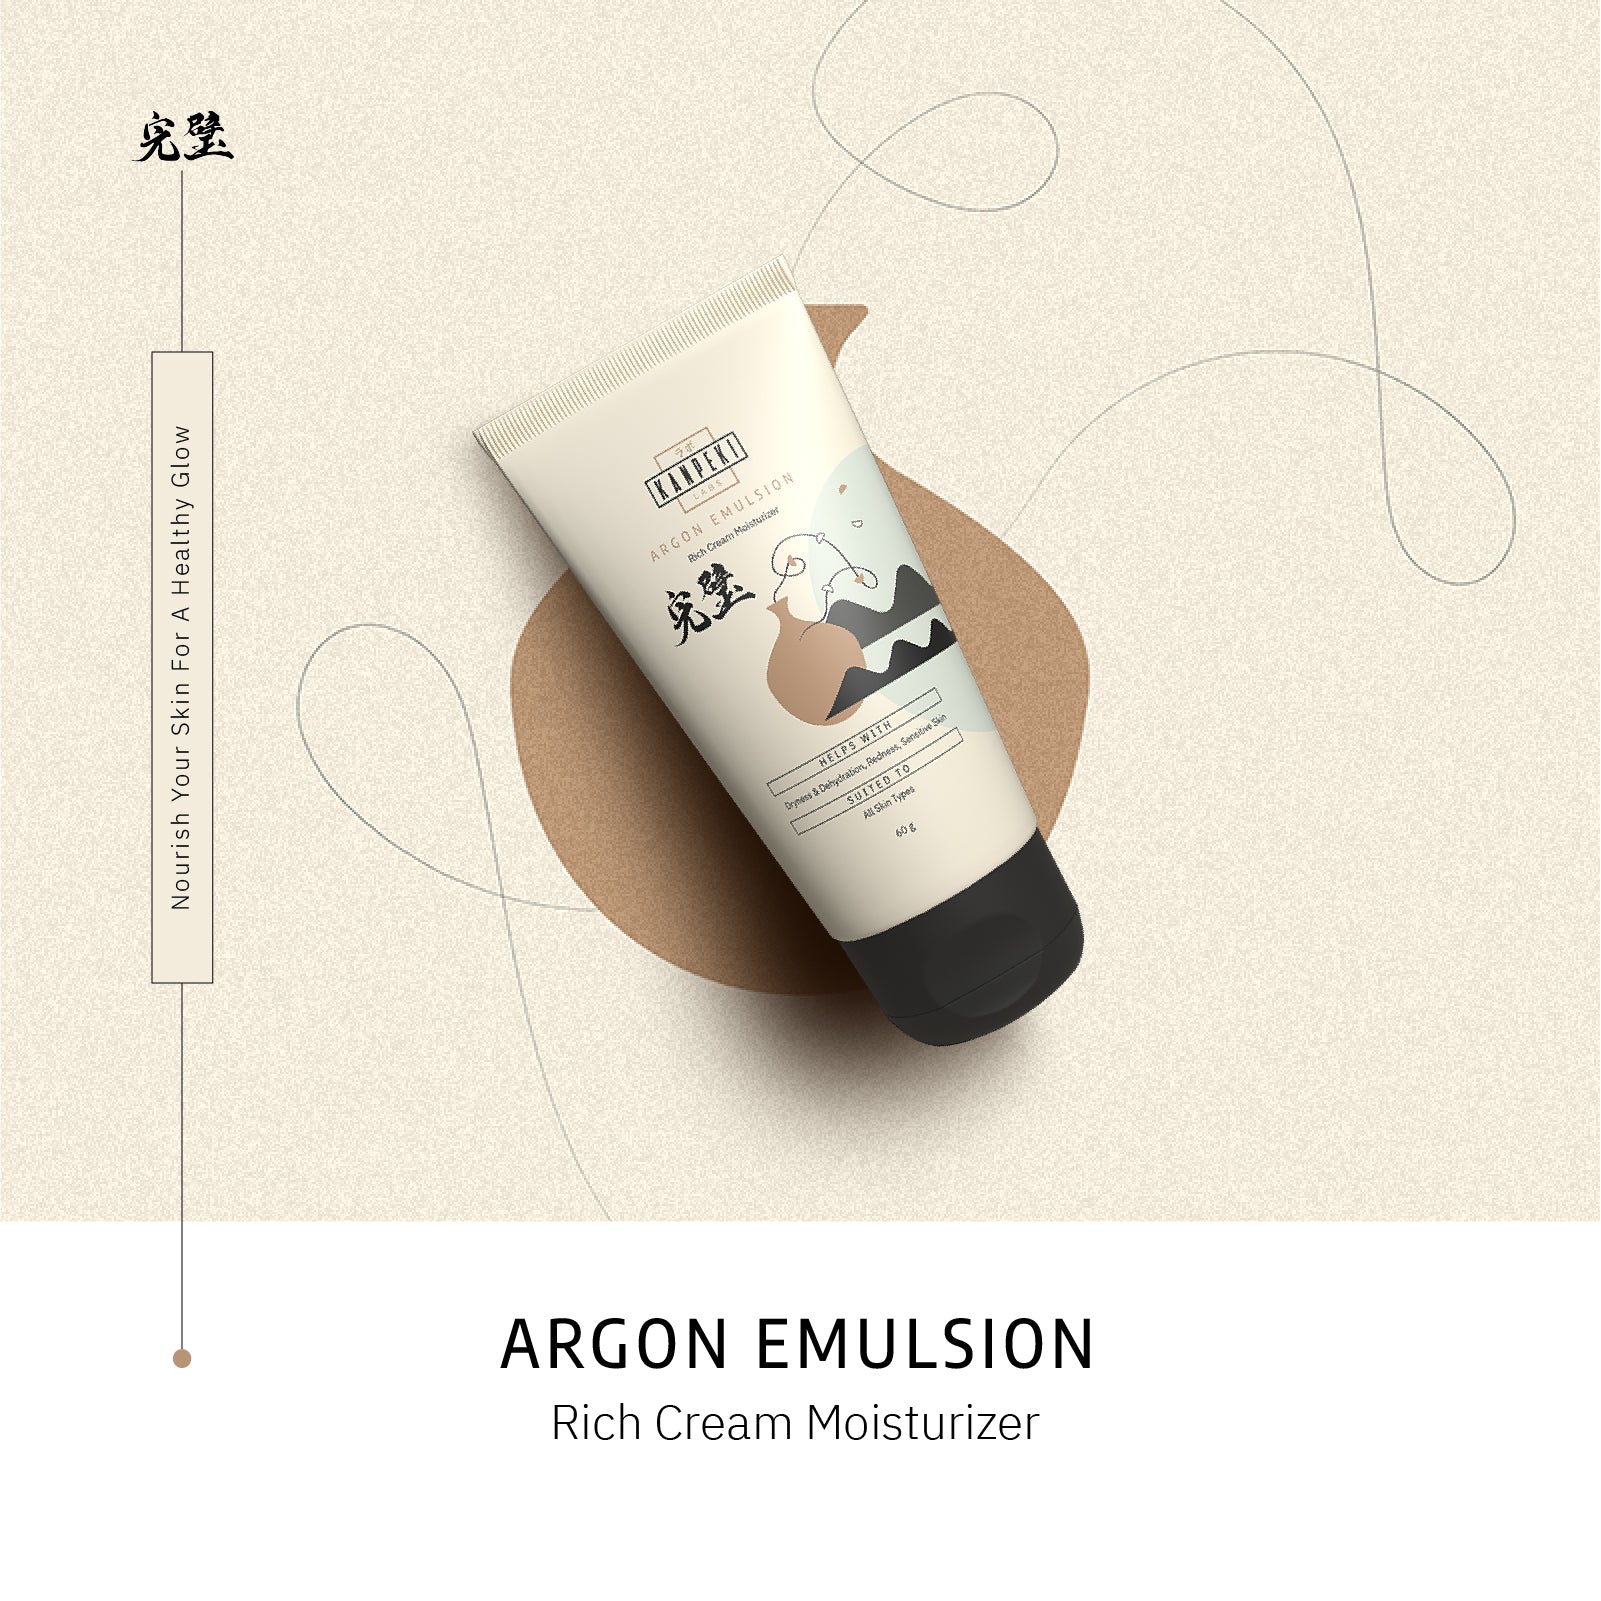 argan emulsion, rich cream, moisturizer, face cream, face moisturizer, best face cream for women, Rich Cream Moisturizer - 8